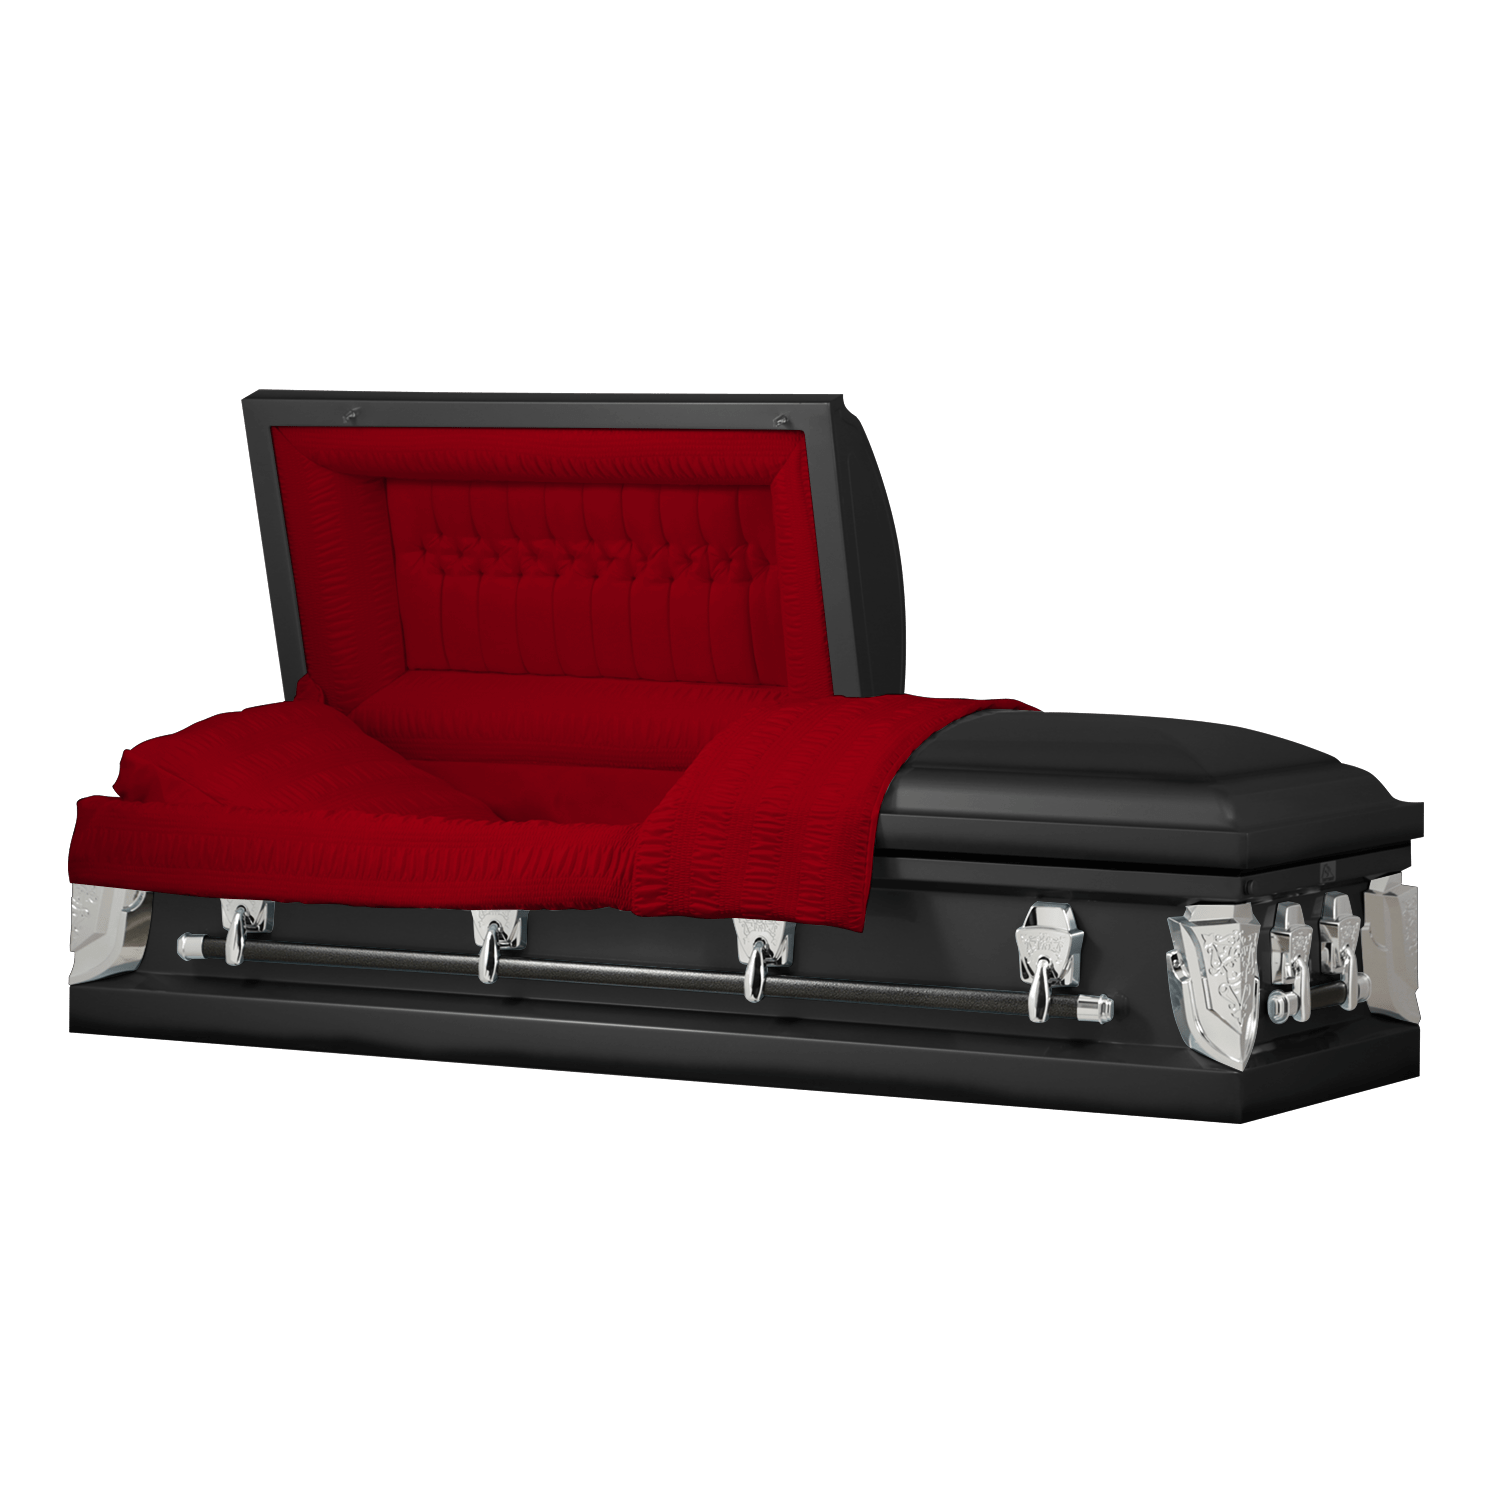 Red Coffins (Caskets) for Sale - at $999 - Titan